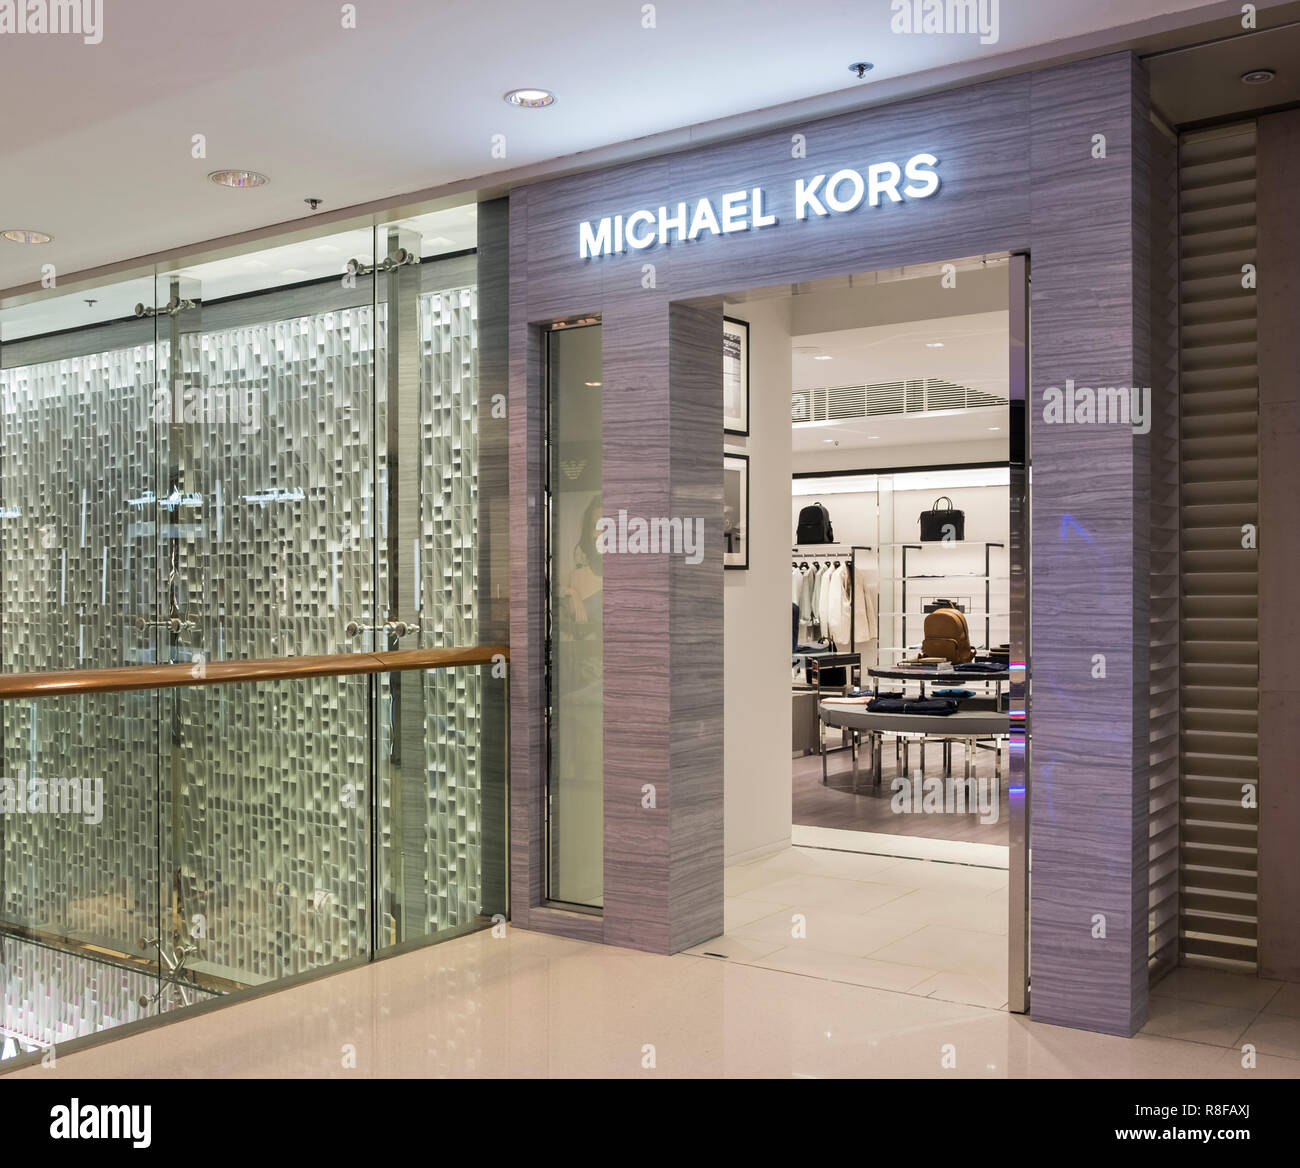 Hong Kong, April 7, 2019: Michael Kors store in Kong Stock - Alamy